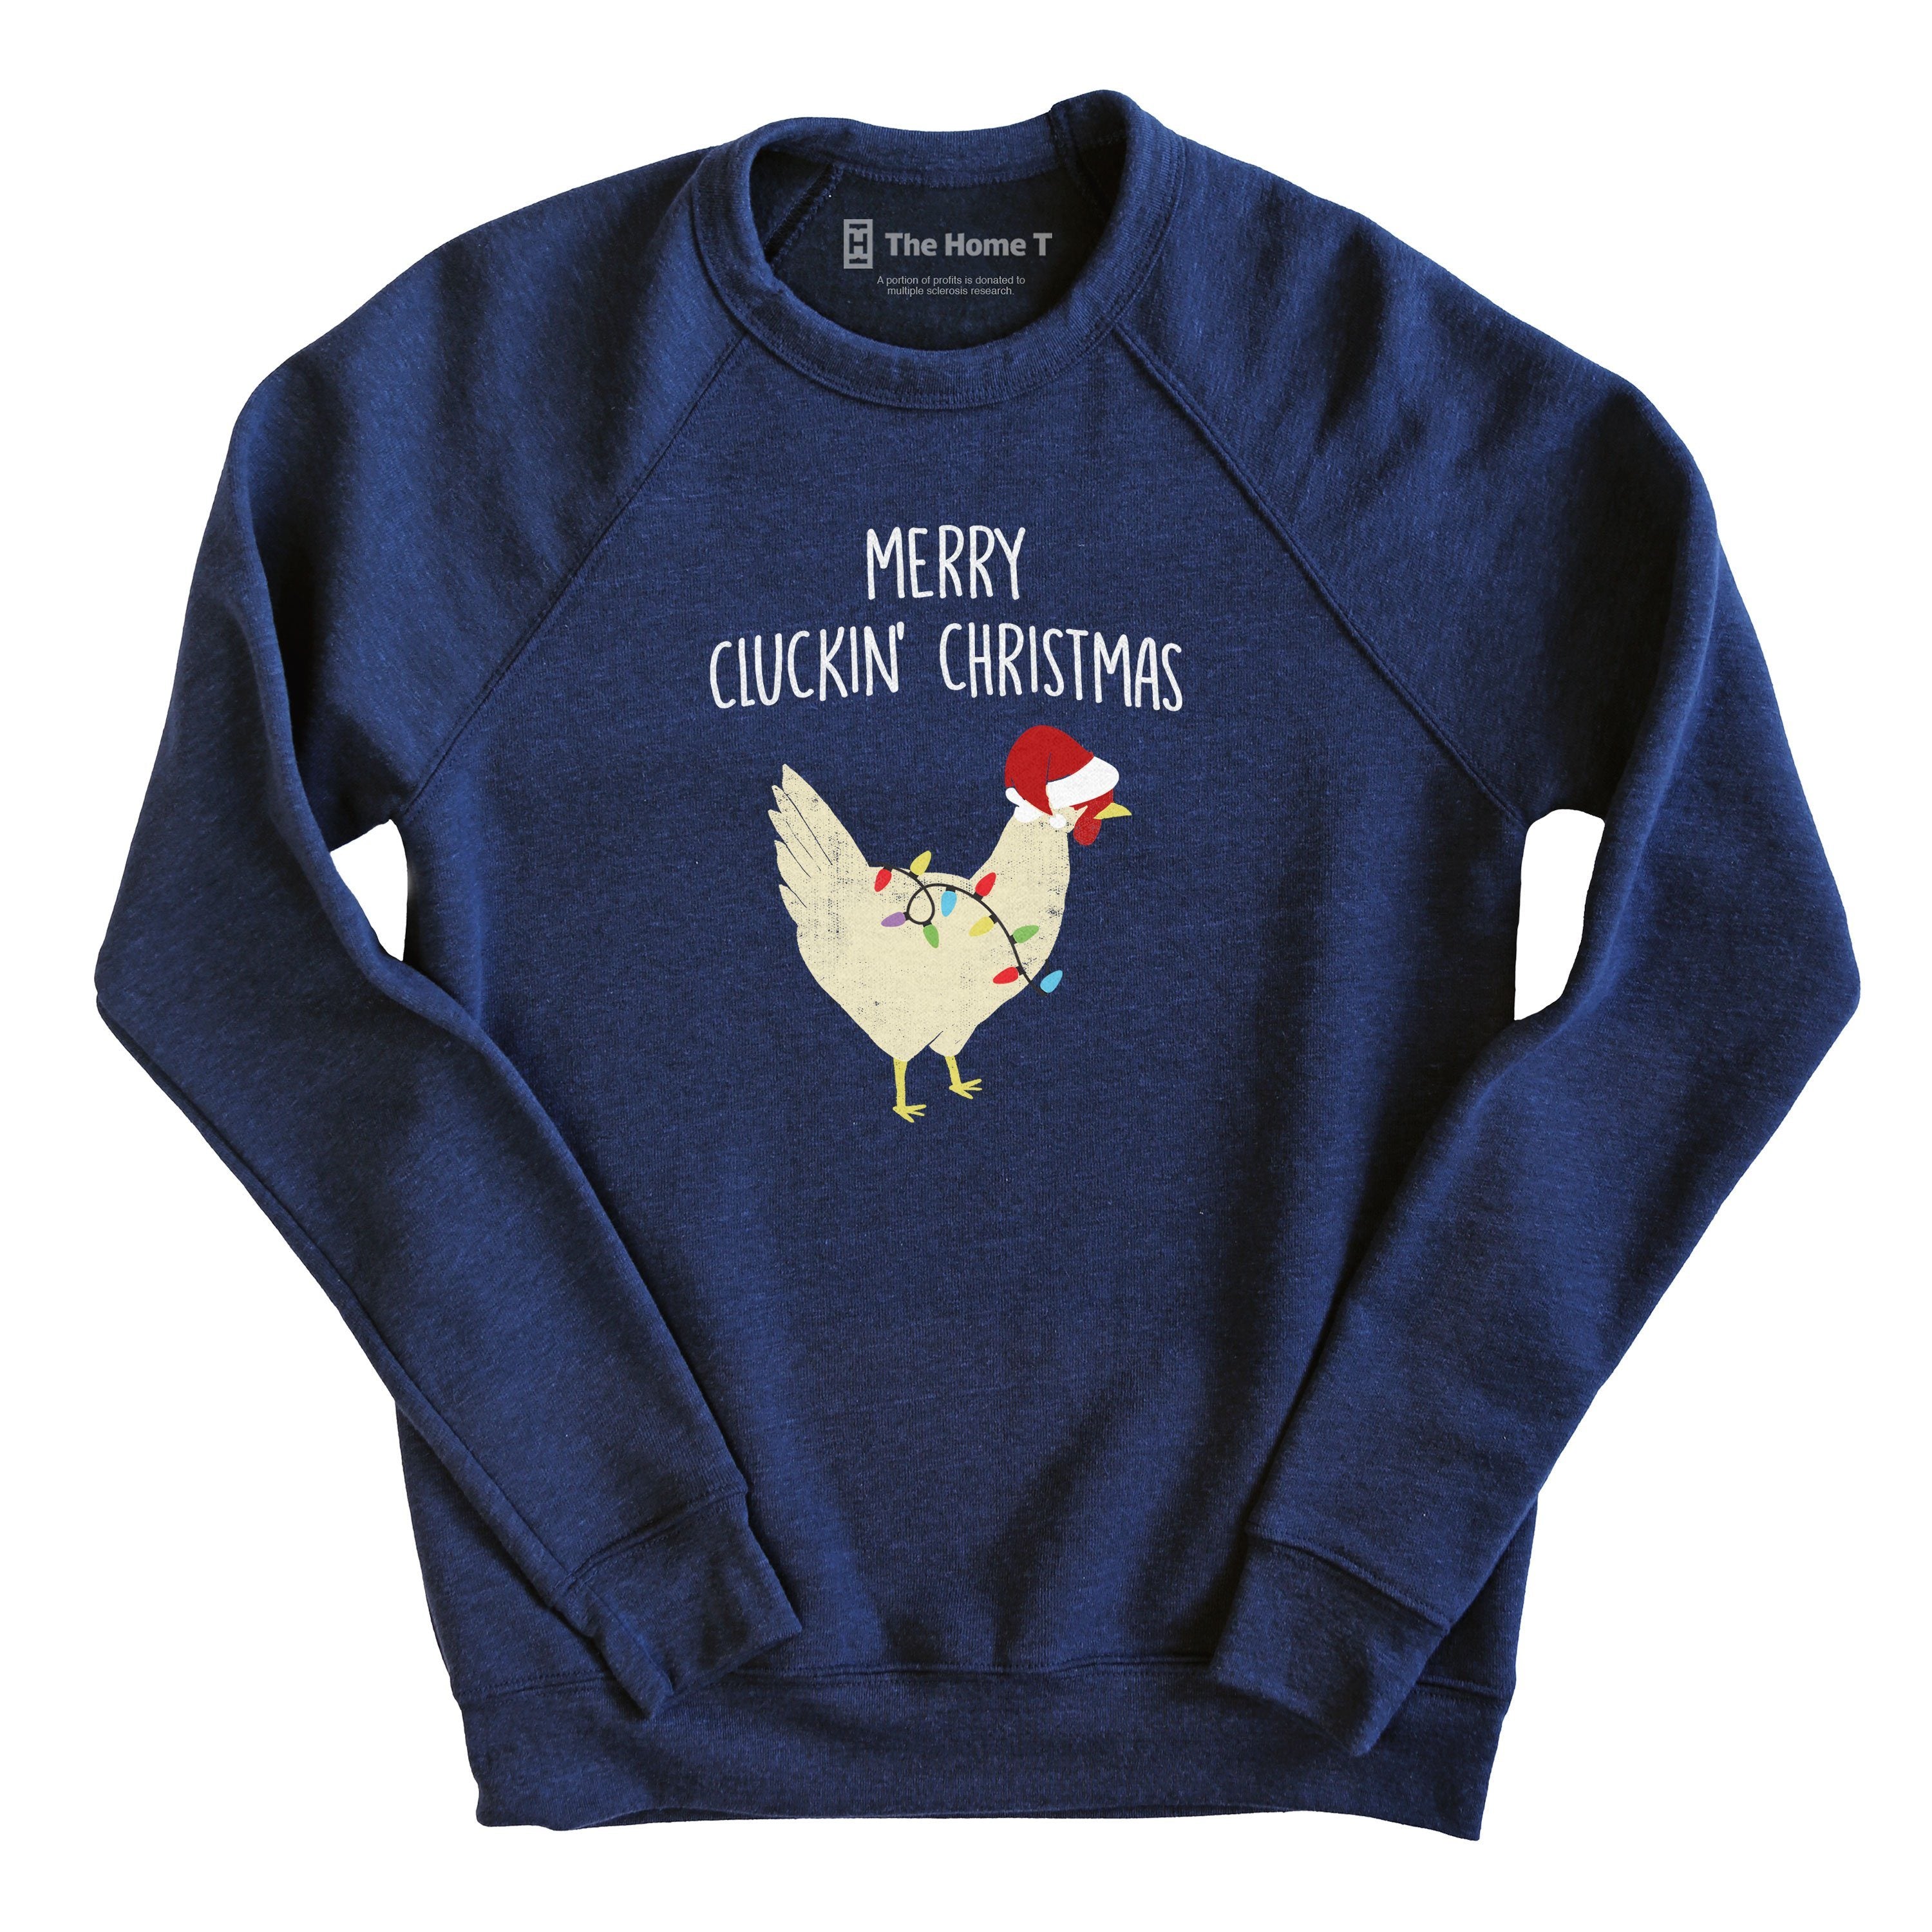 Merry Cluckin' Christmas Sweatshirt